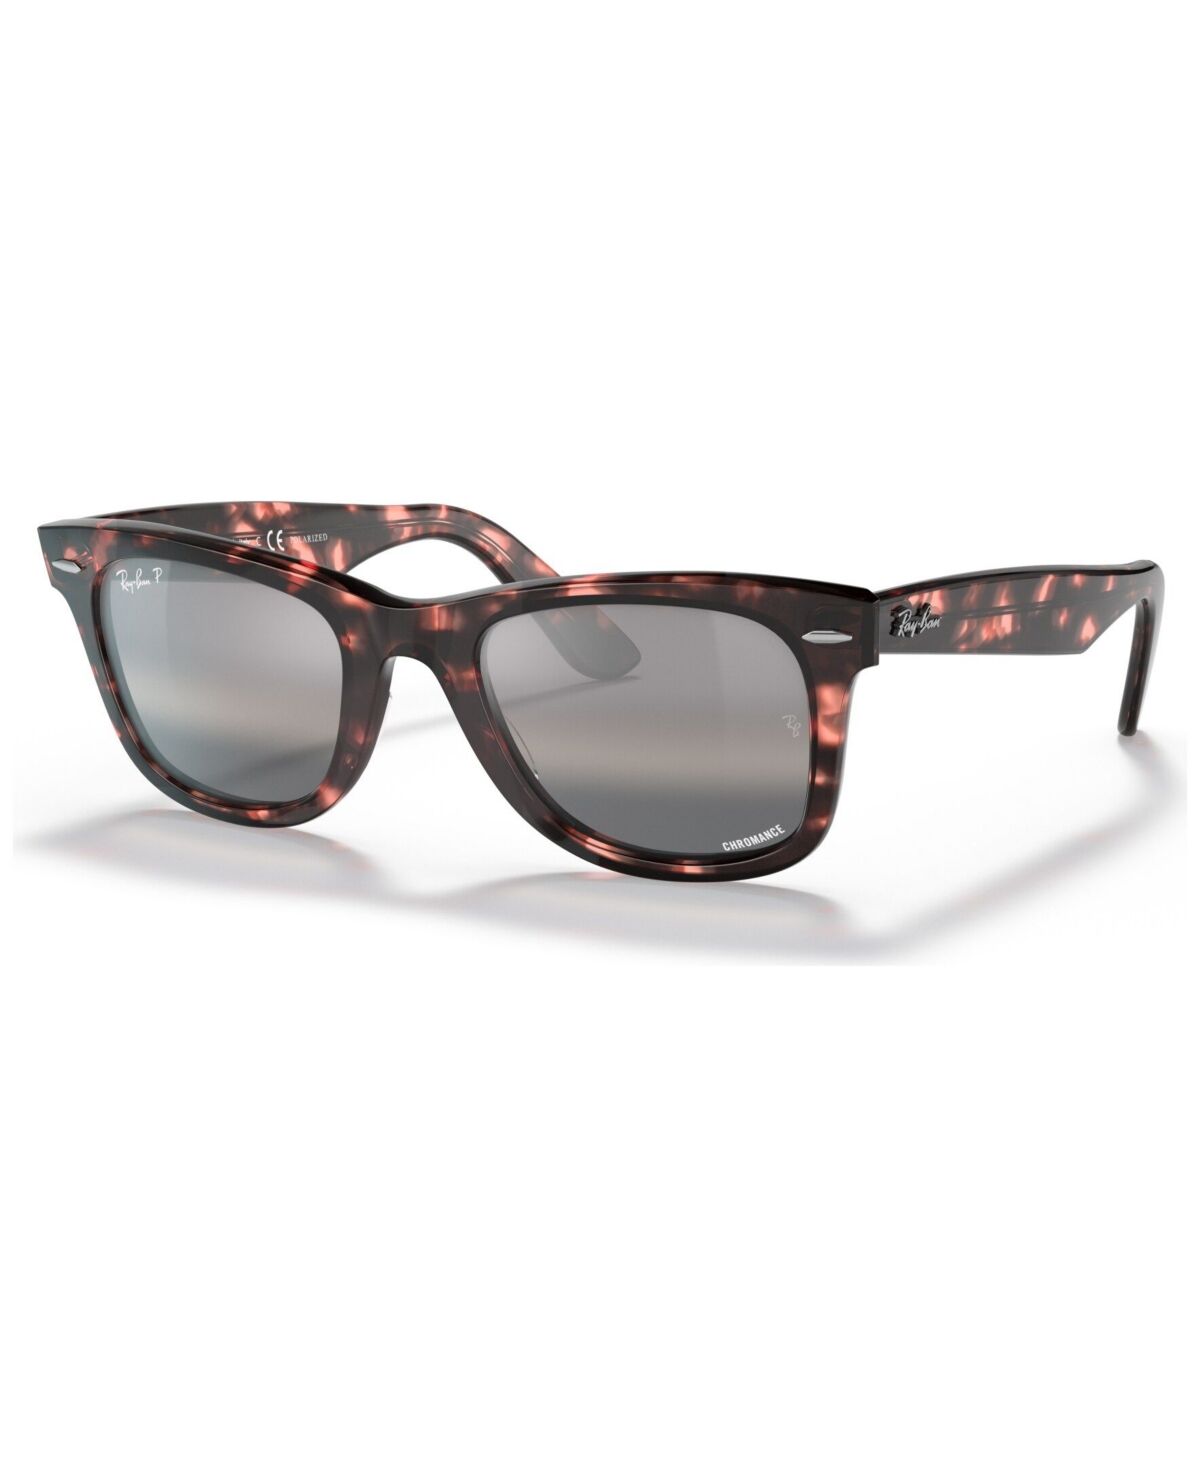 Ray-Ban Unisex Polarized Sunglasses, RB2140 Wayfarer Chromance - Pink Havana